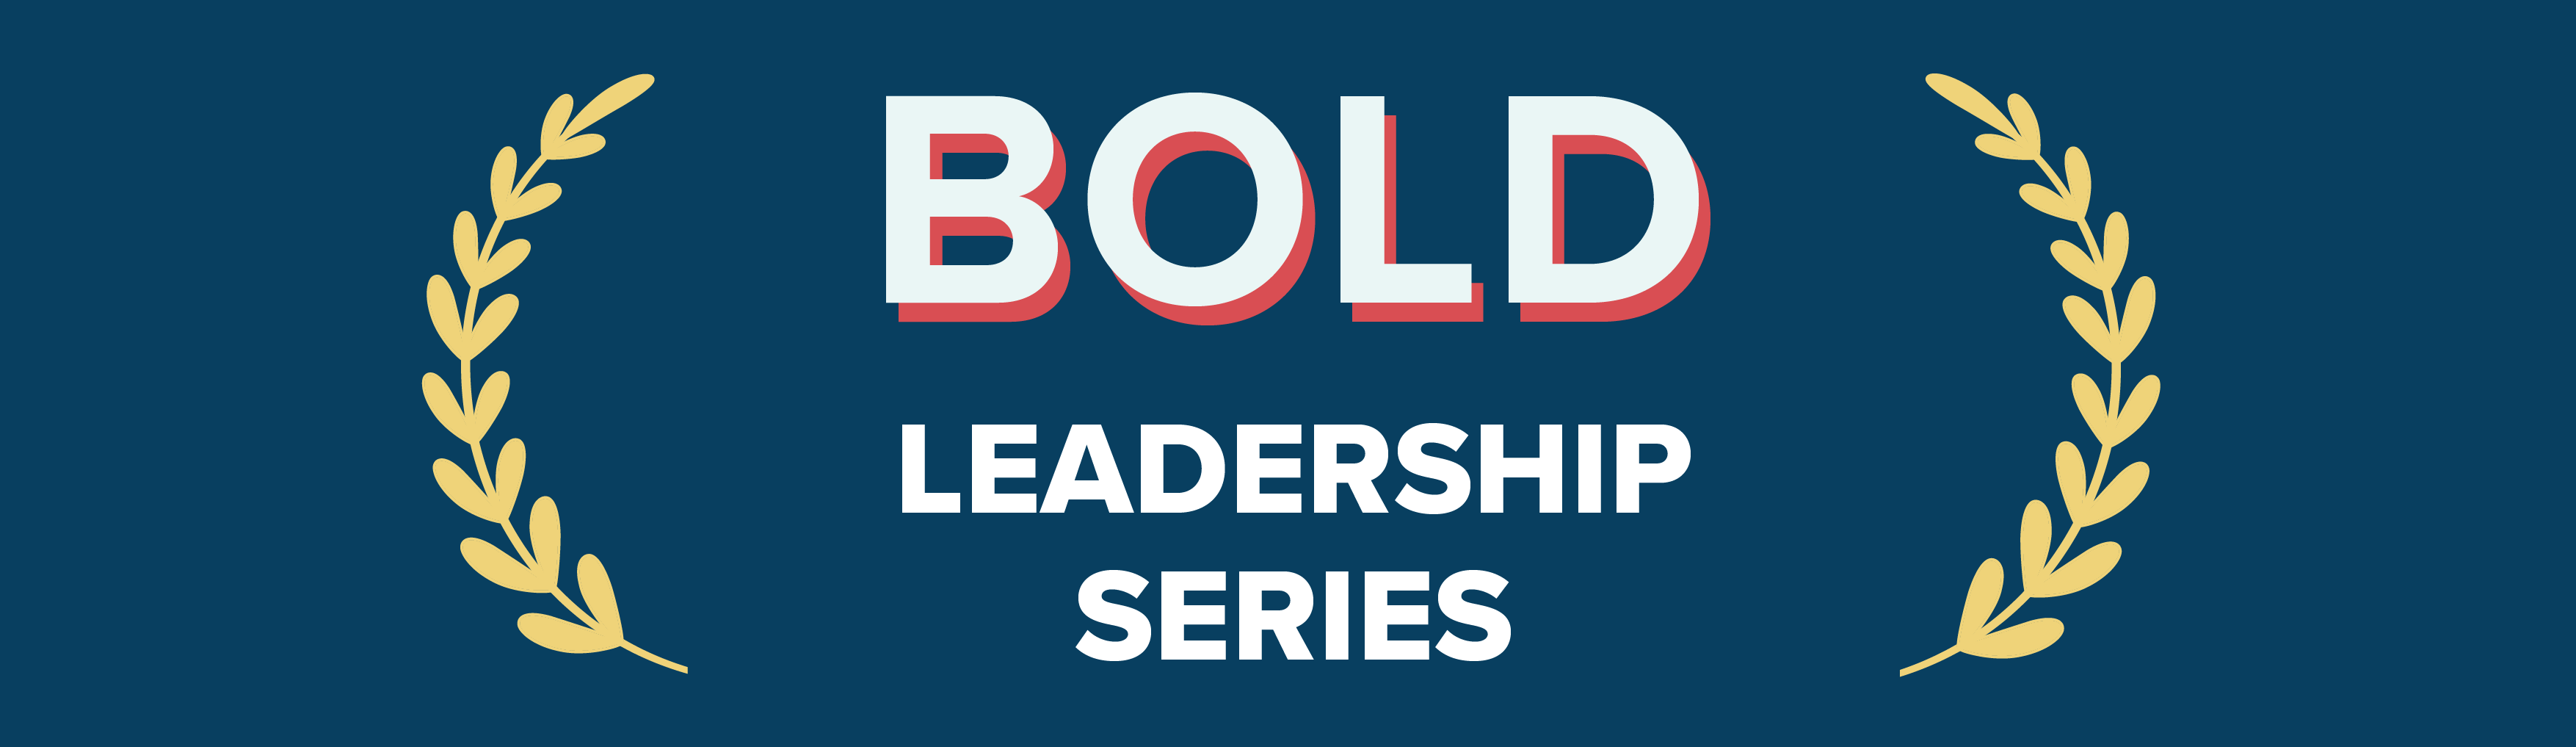 BOLD-leadership-header